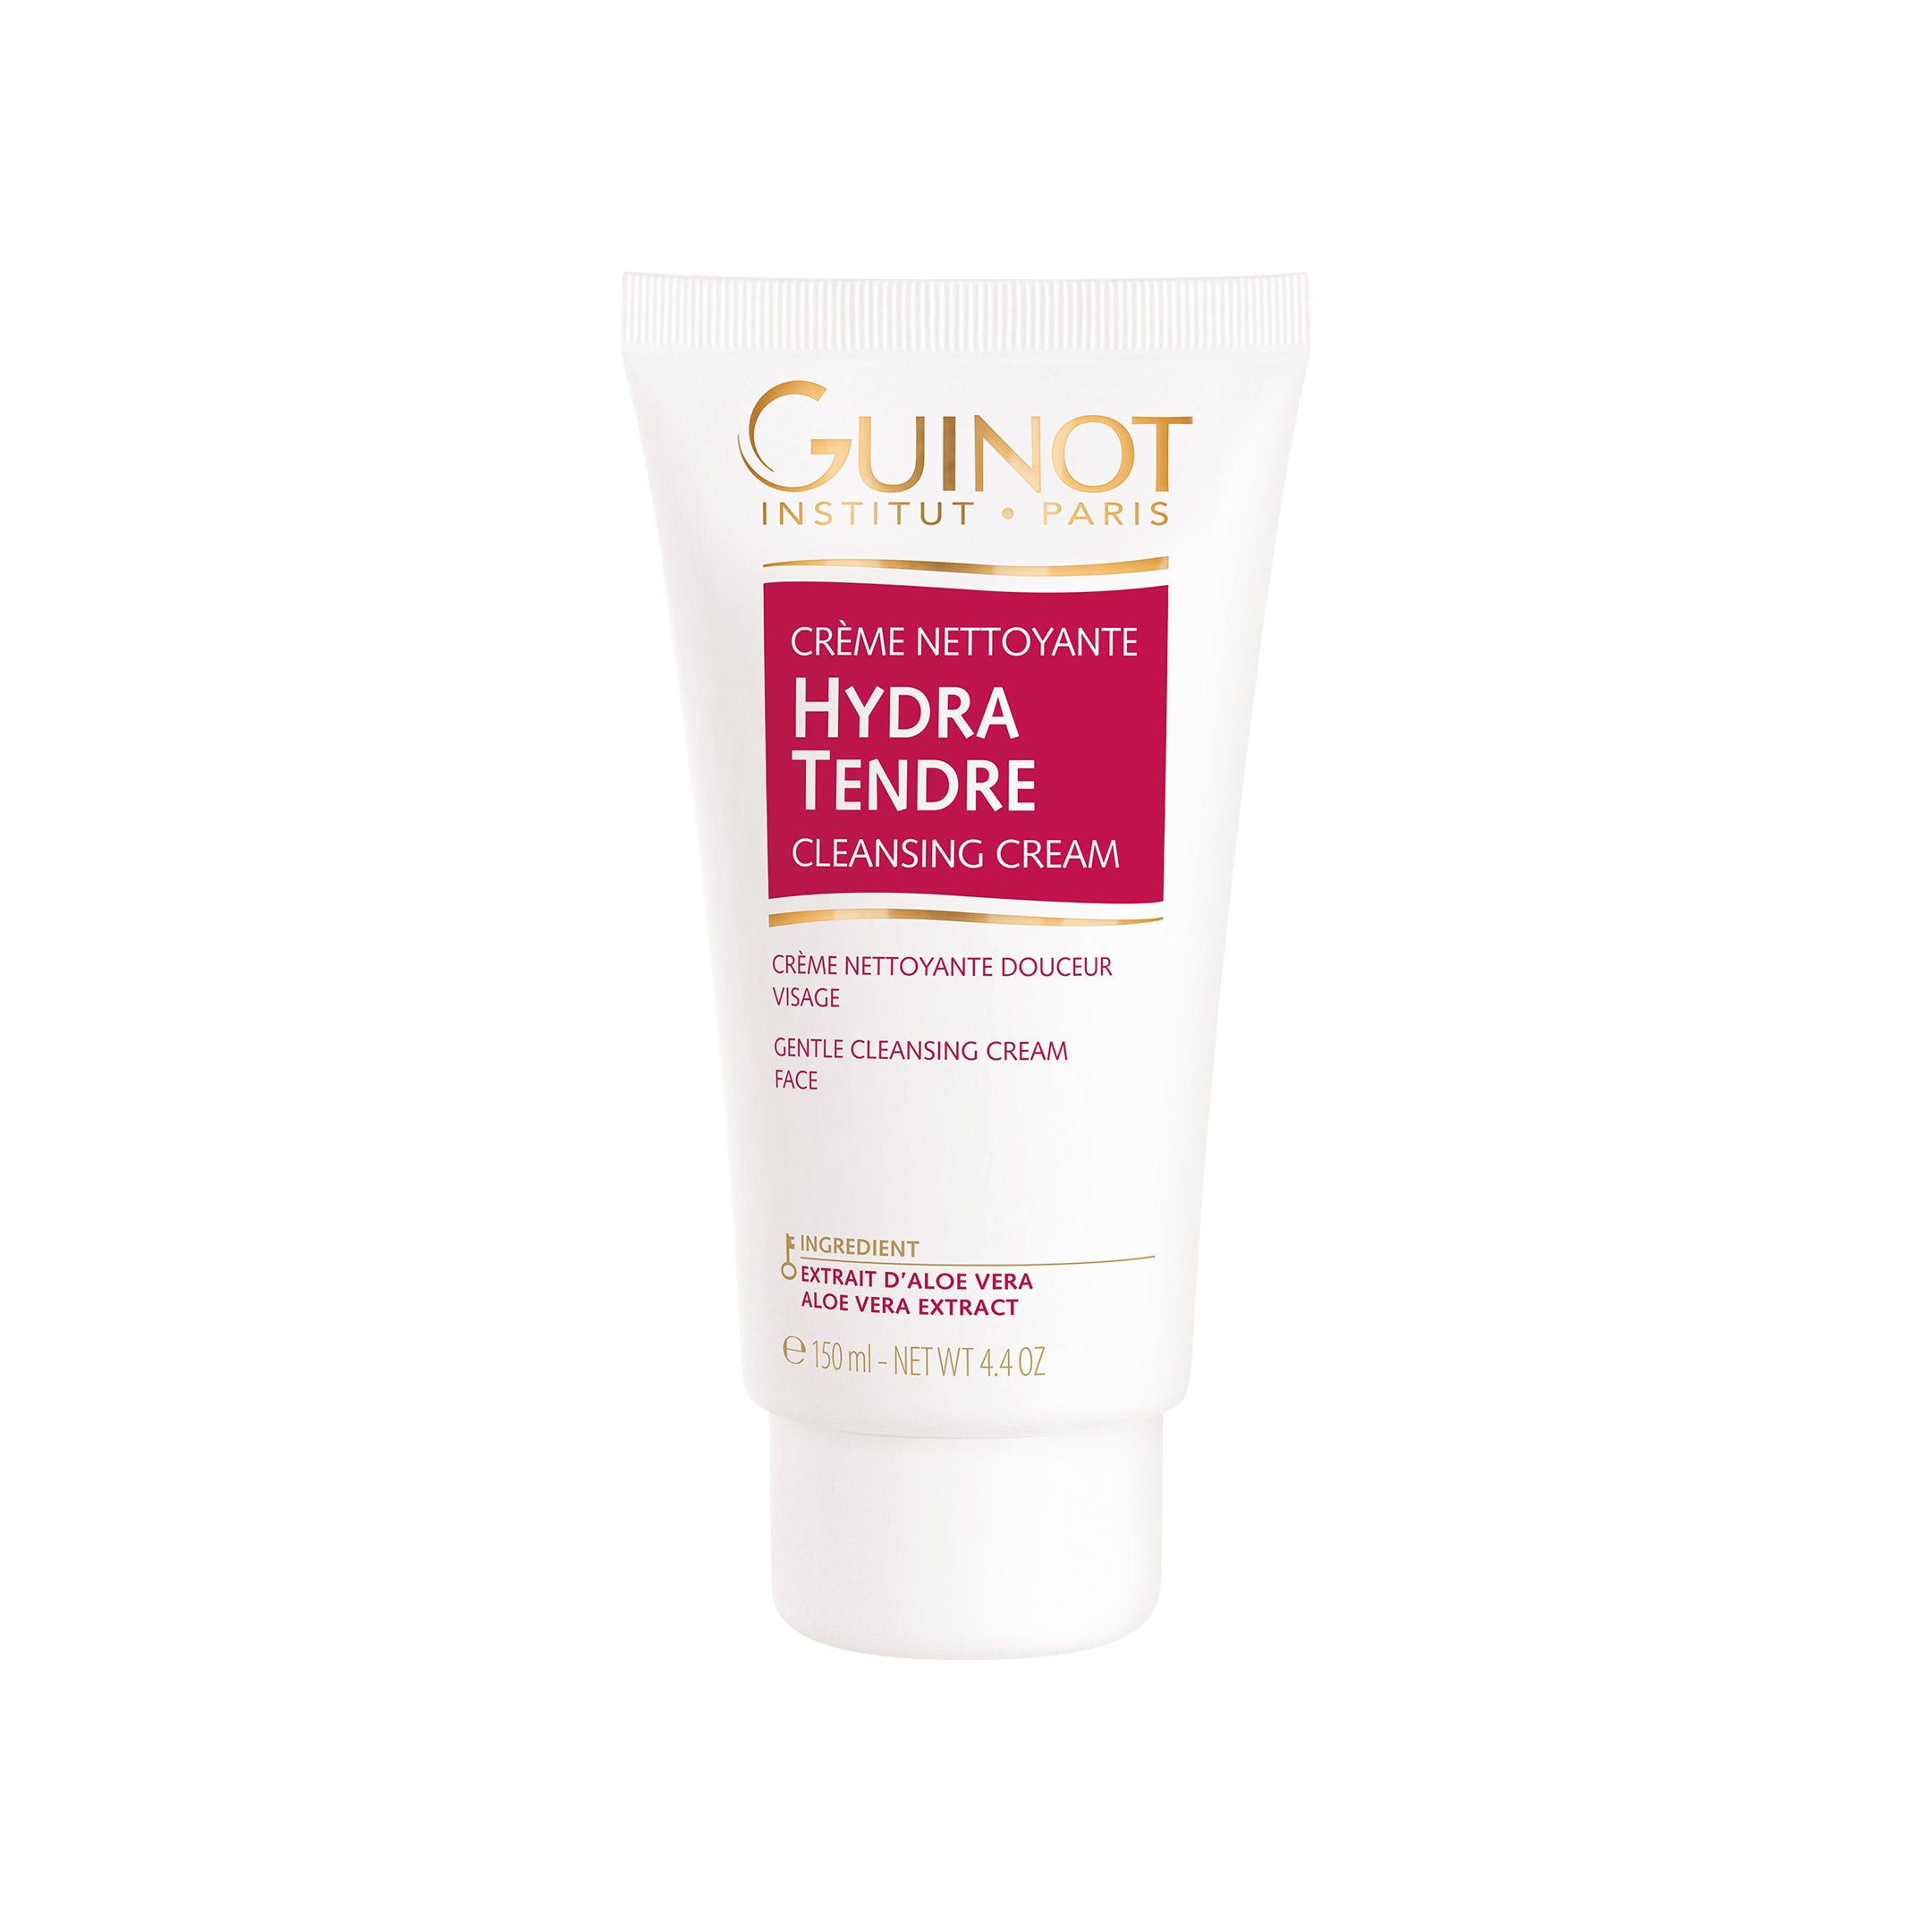 Hydra Tendre (Crème Nettoyante Hydra Tendre Cleansing Cream) - Guinot